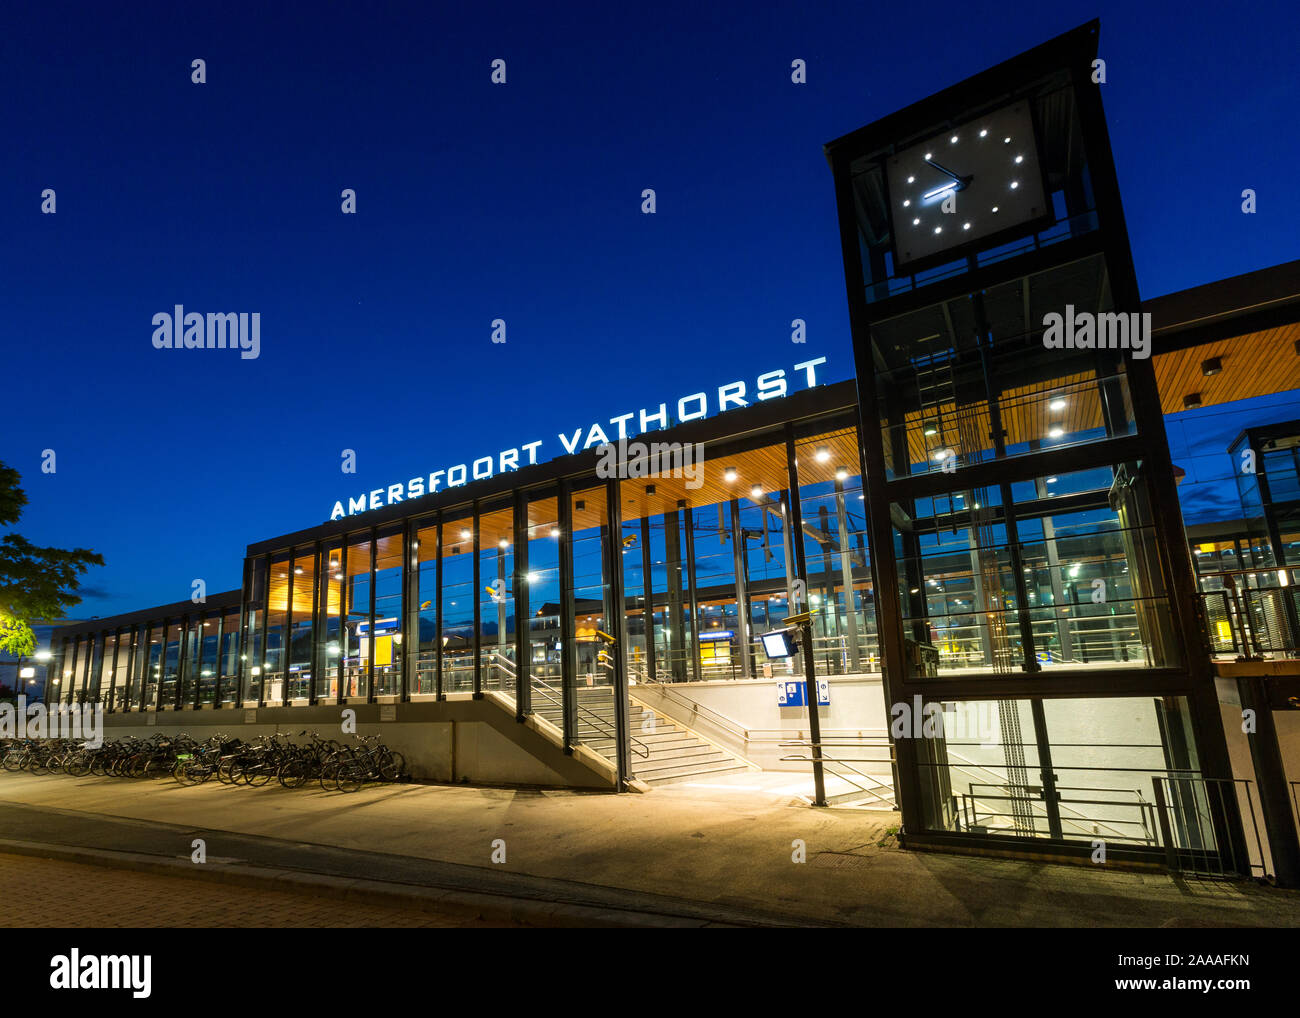 AMERSFOORT, THE NETHERLANDS - September 08, 2019: Illuminated train station Amersfoort Vathorst during blue hour with empty platform and parked bikes Stock Photo